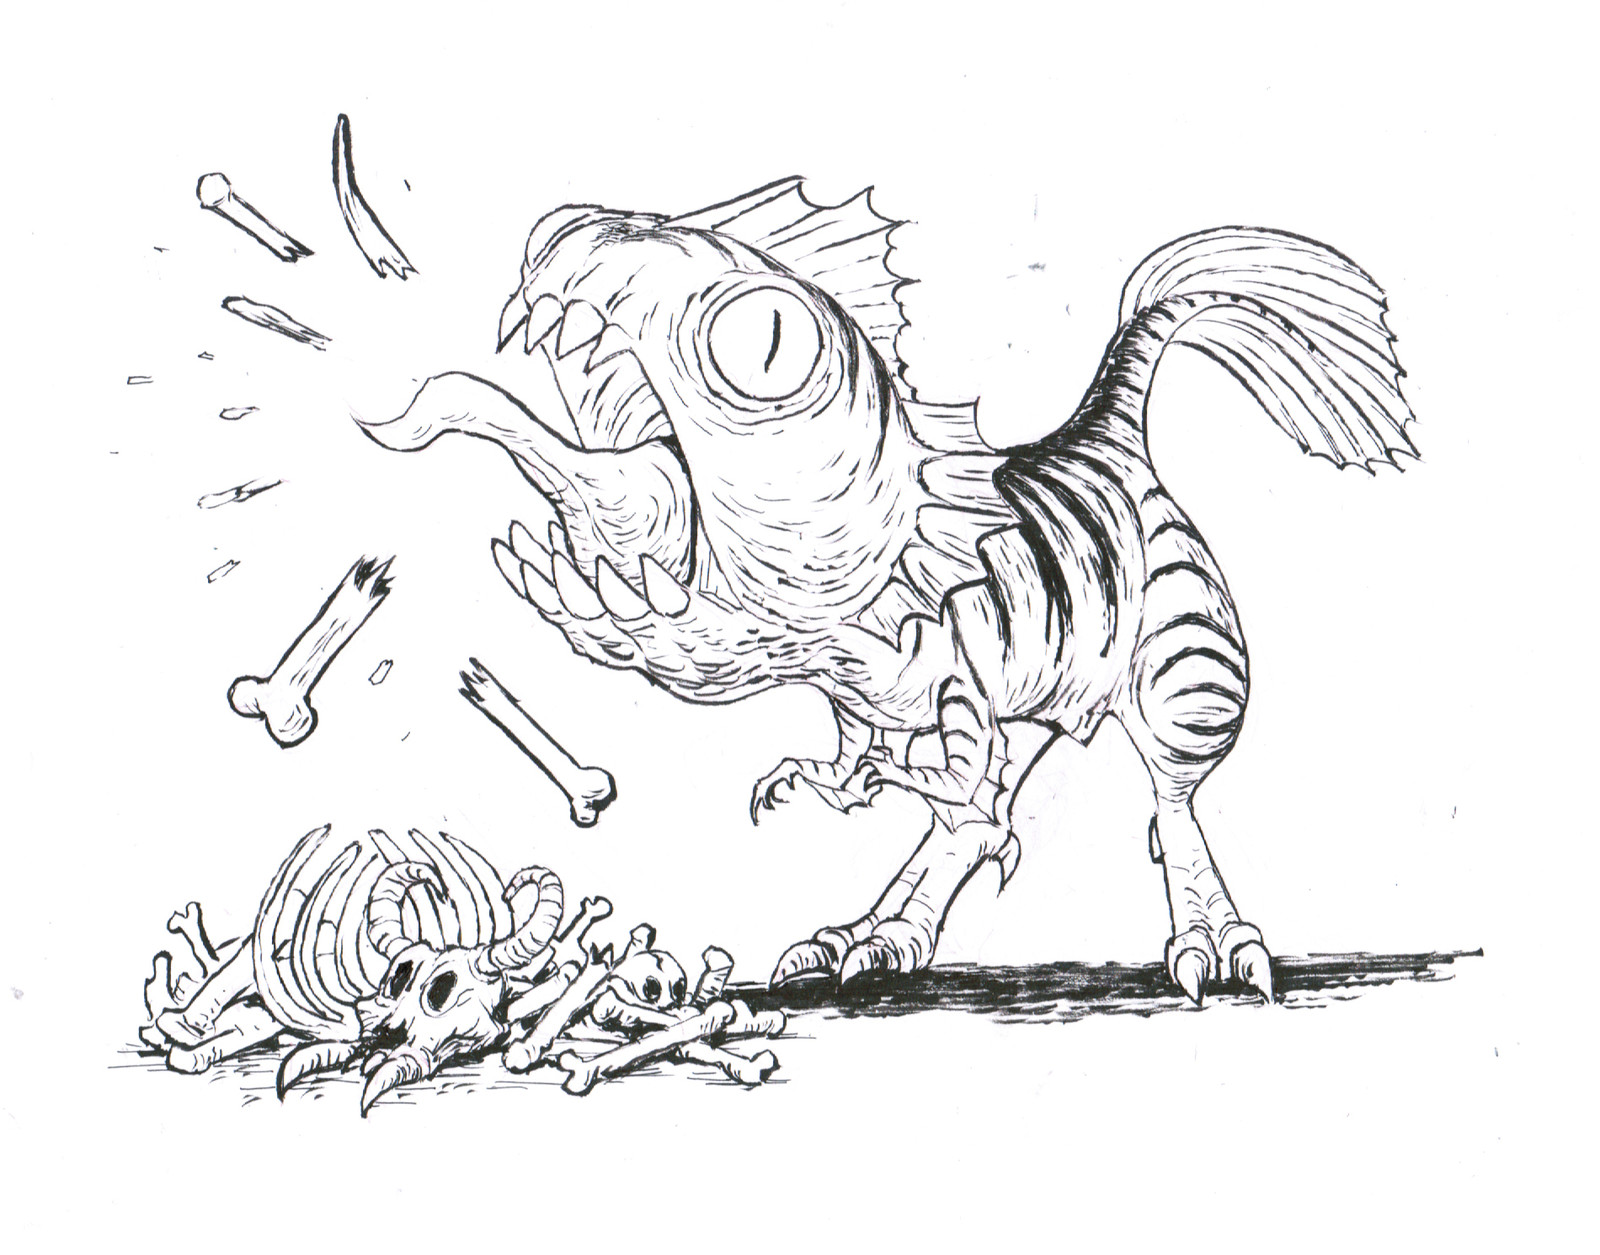 The piranhasaurus loved to chew on piles of broken bones. 